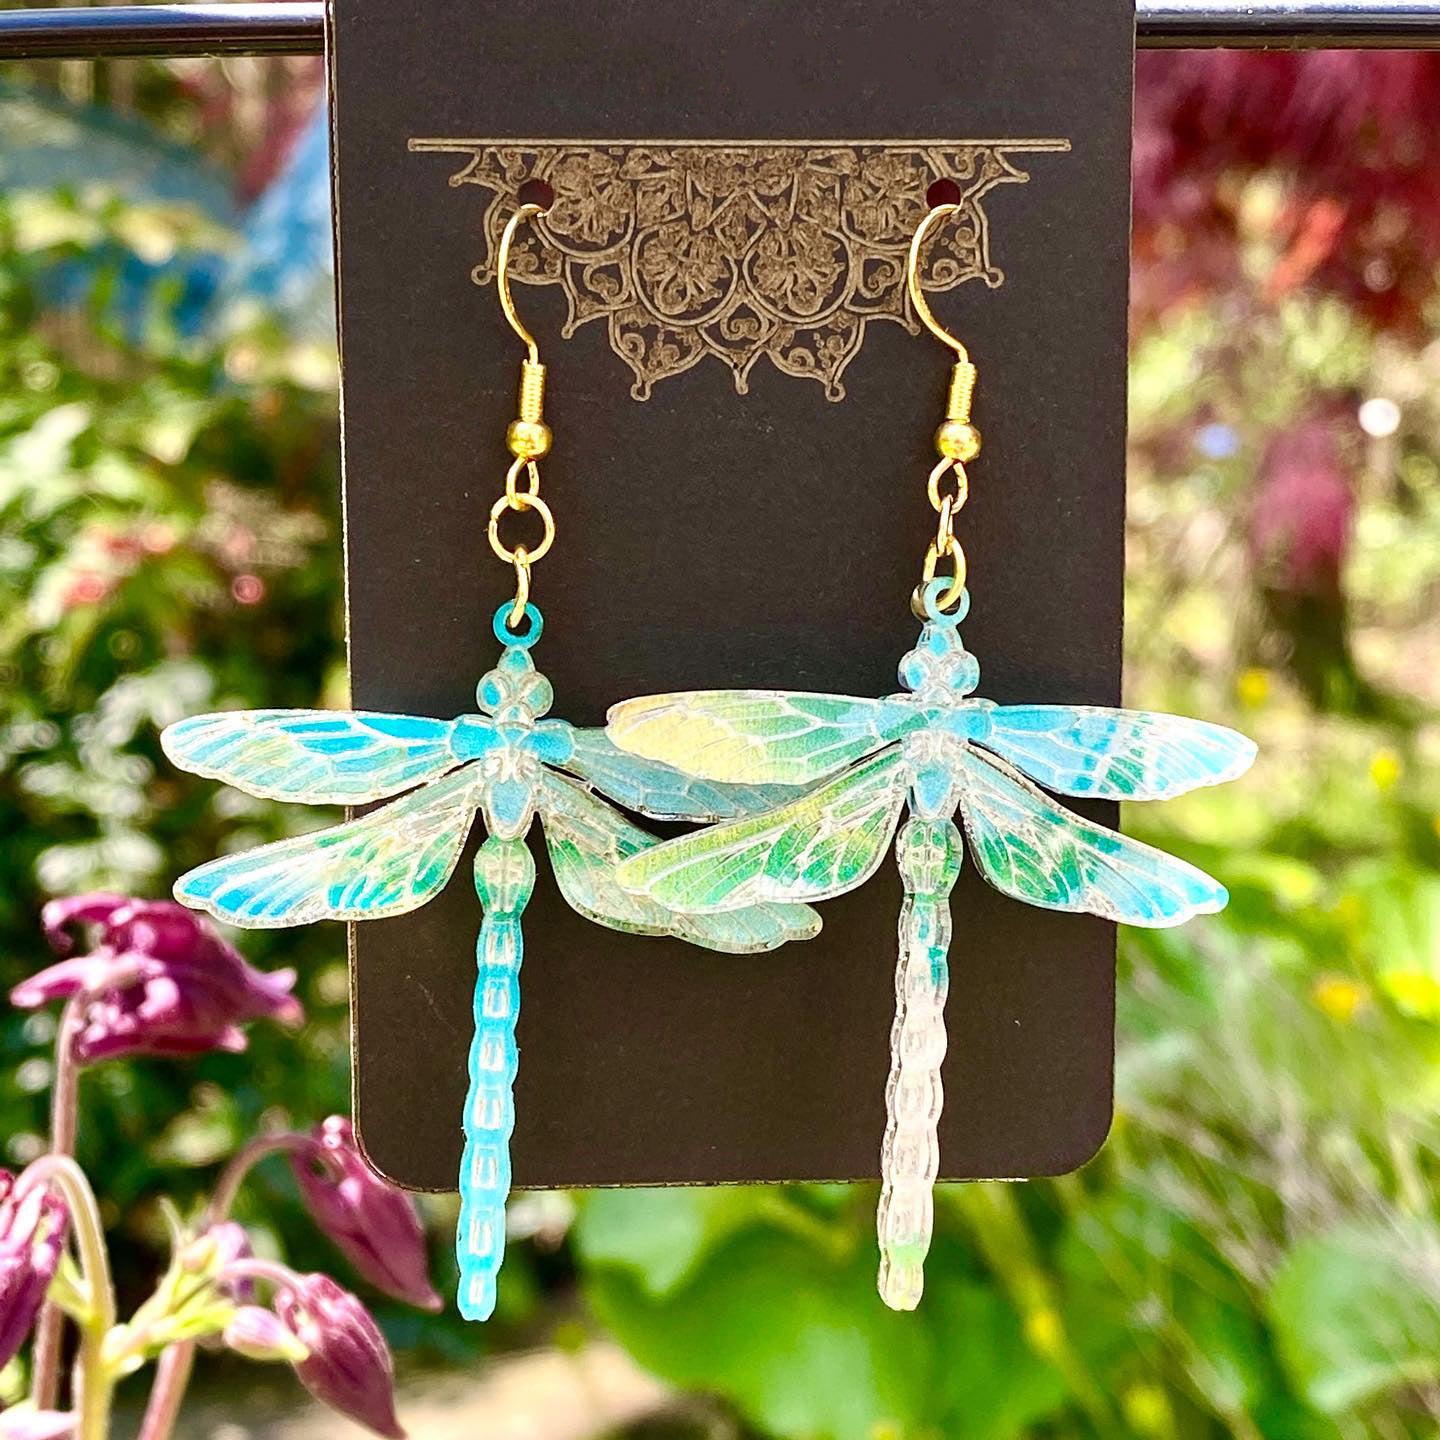 Delightfully Intricate Dragonfly Earrings